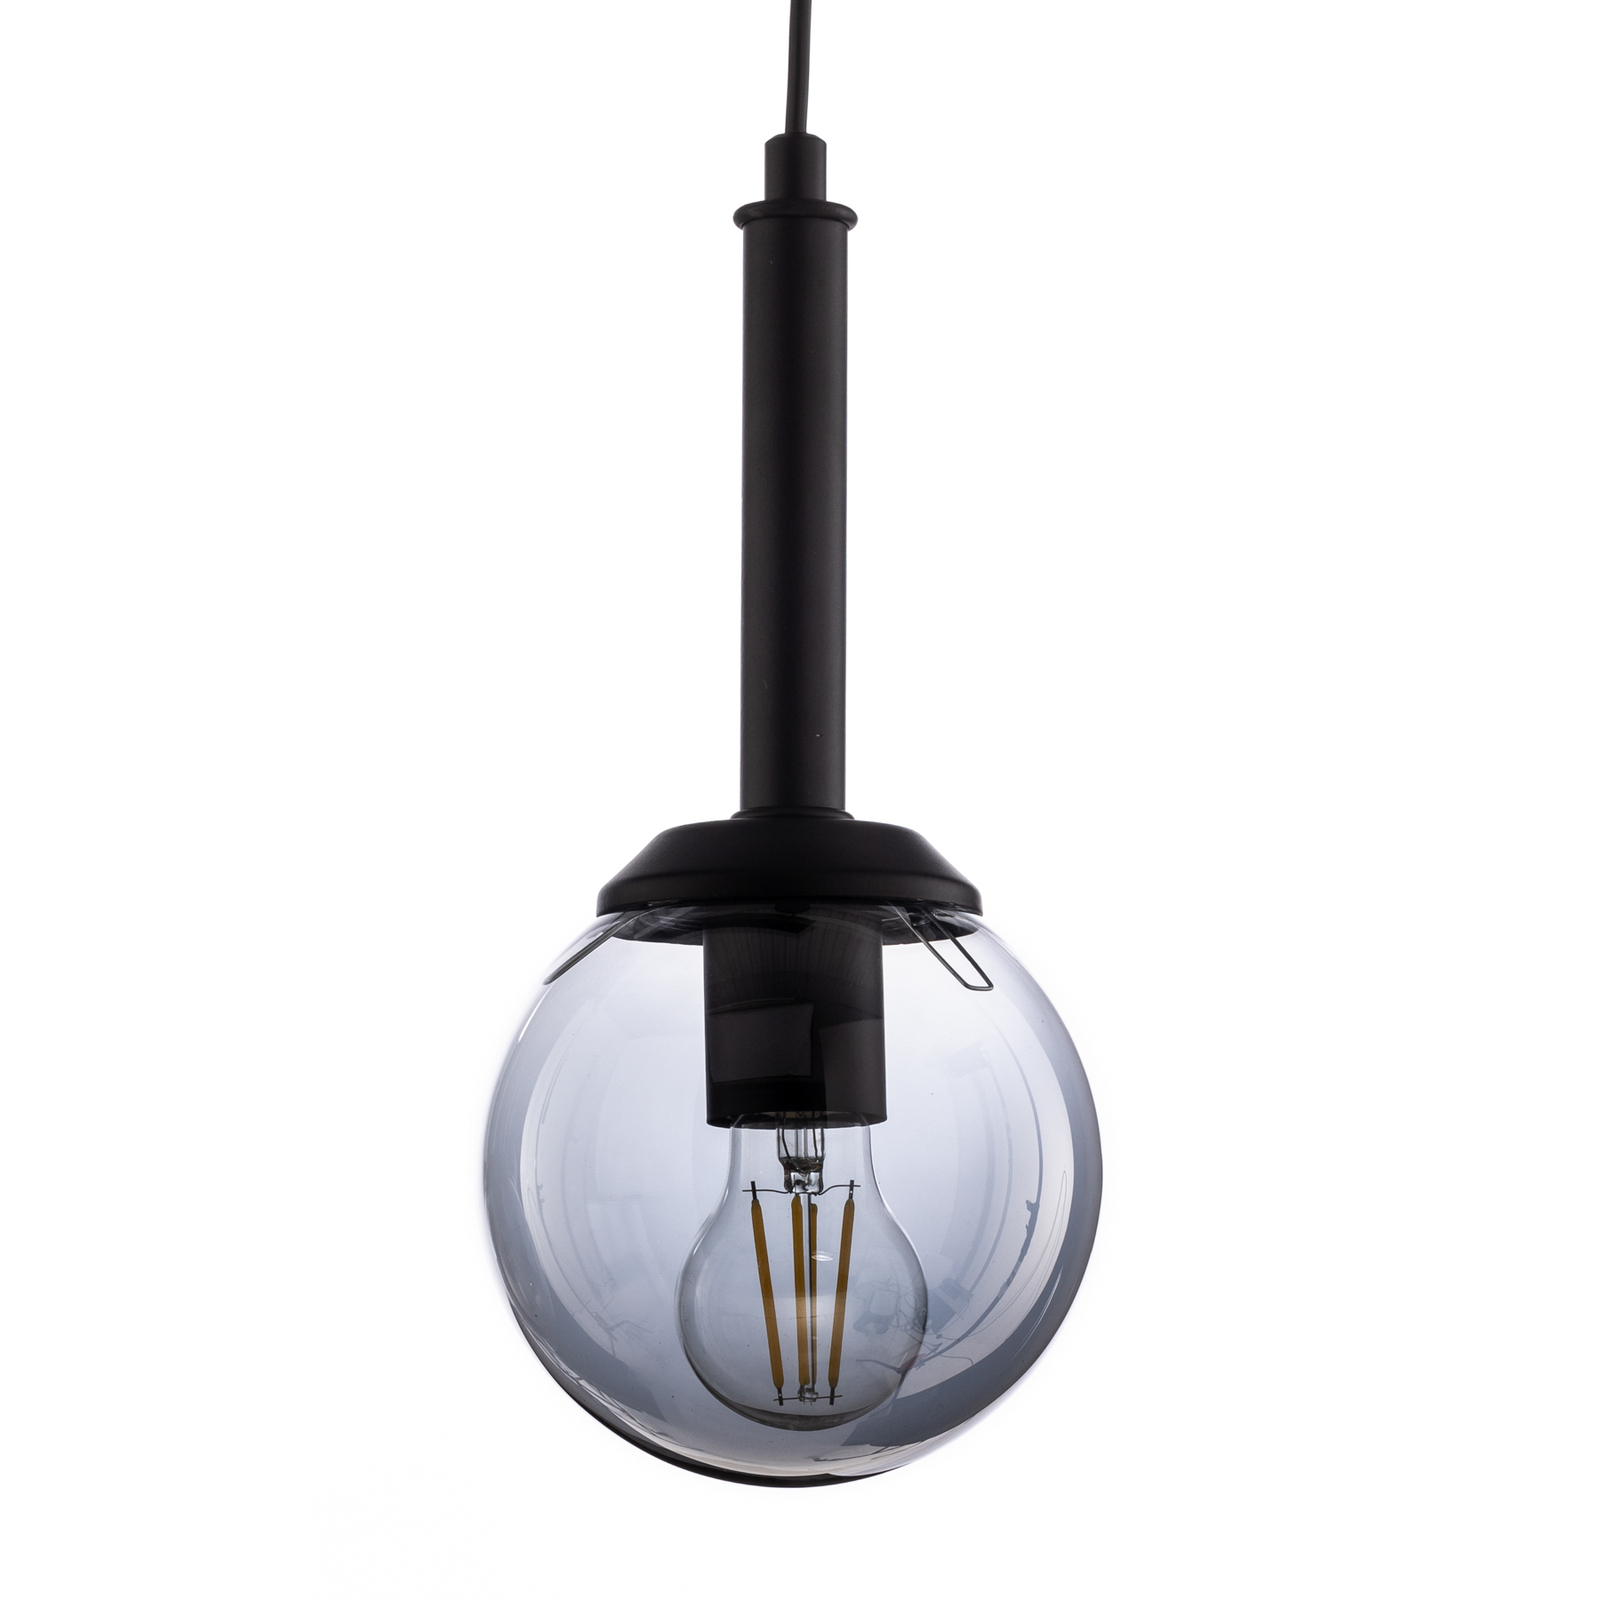 Hanglamp AV-7002-1781-4Y-BSY 4-lamps lang